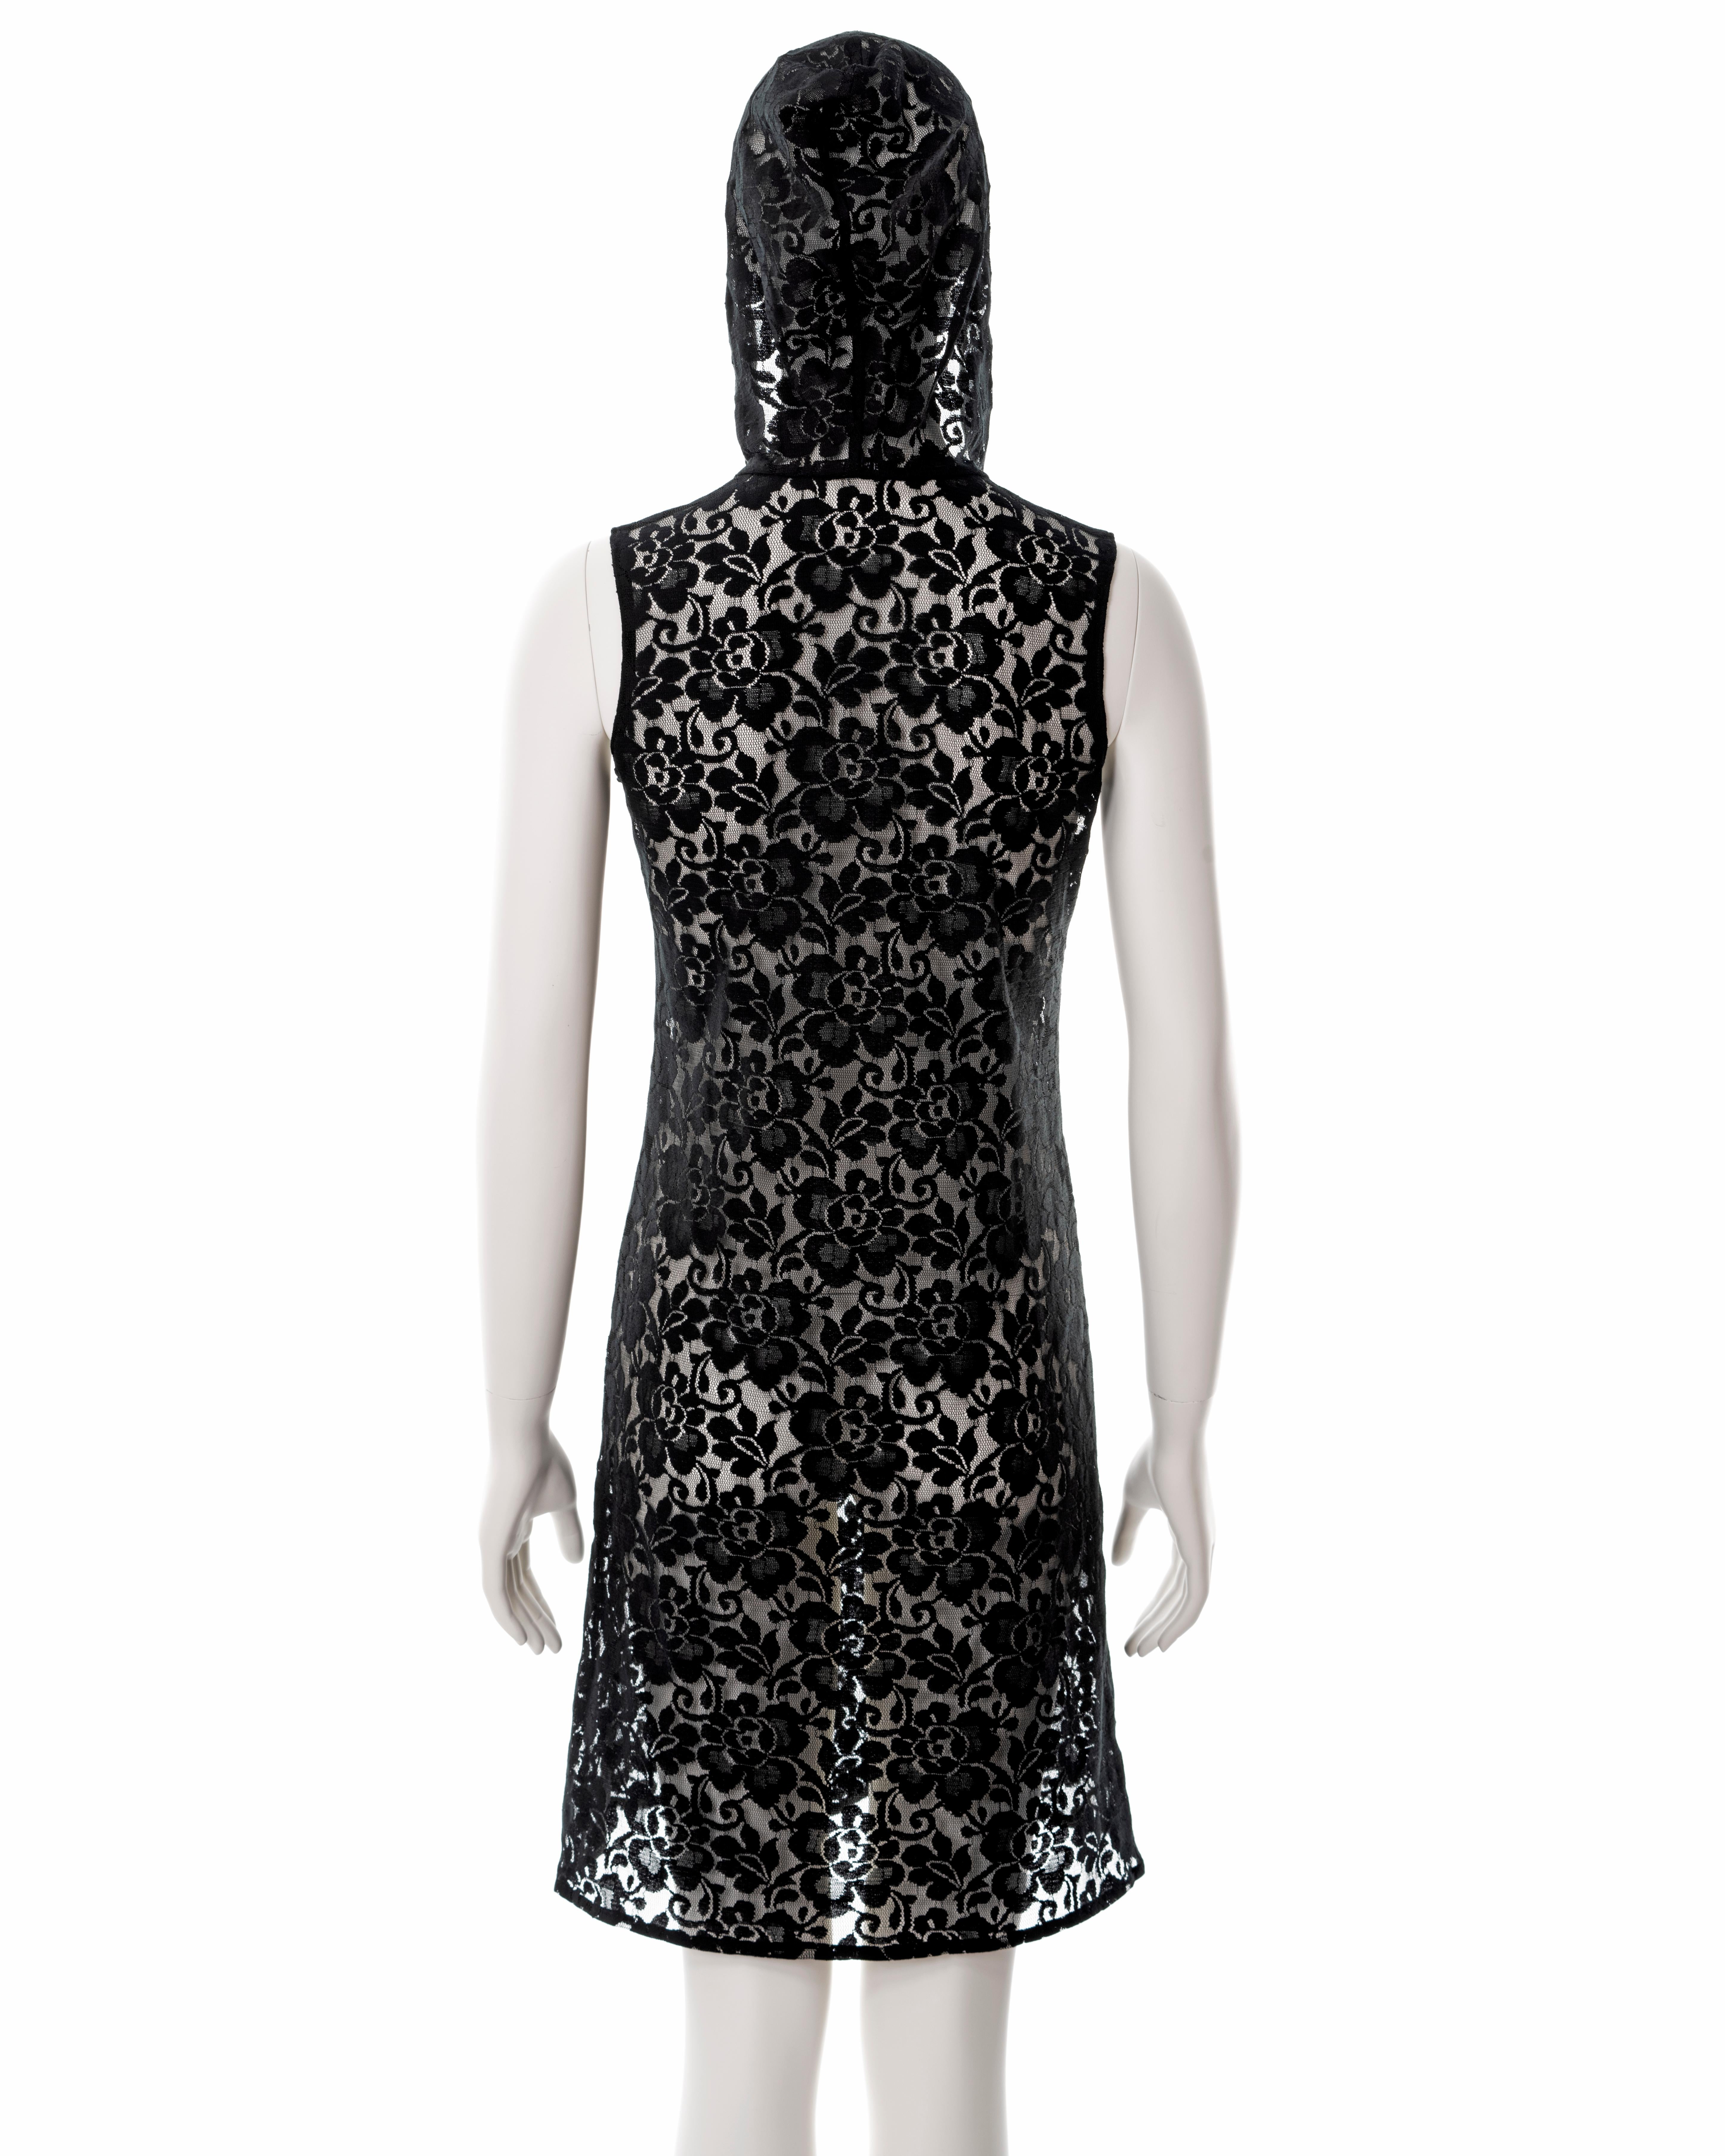 Helmut Lang black lace hooded shift dress, ss 1996 For Sale 5